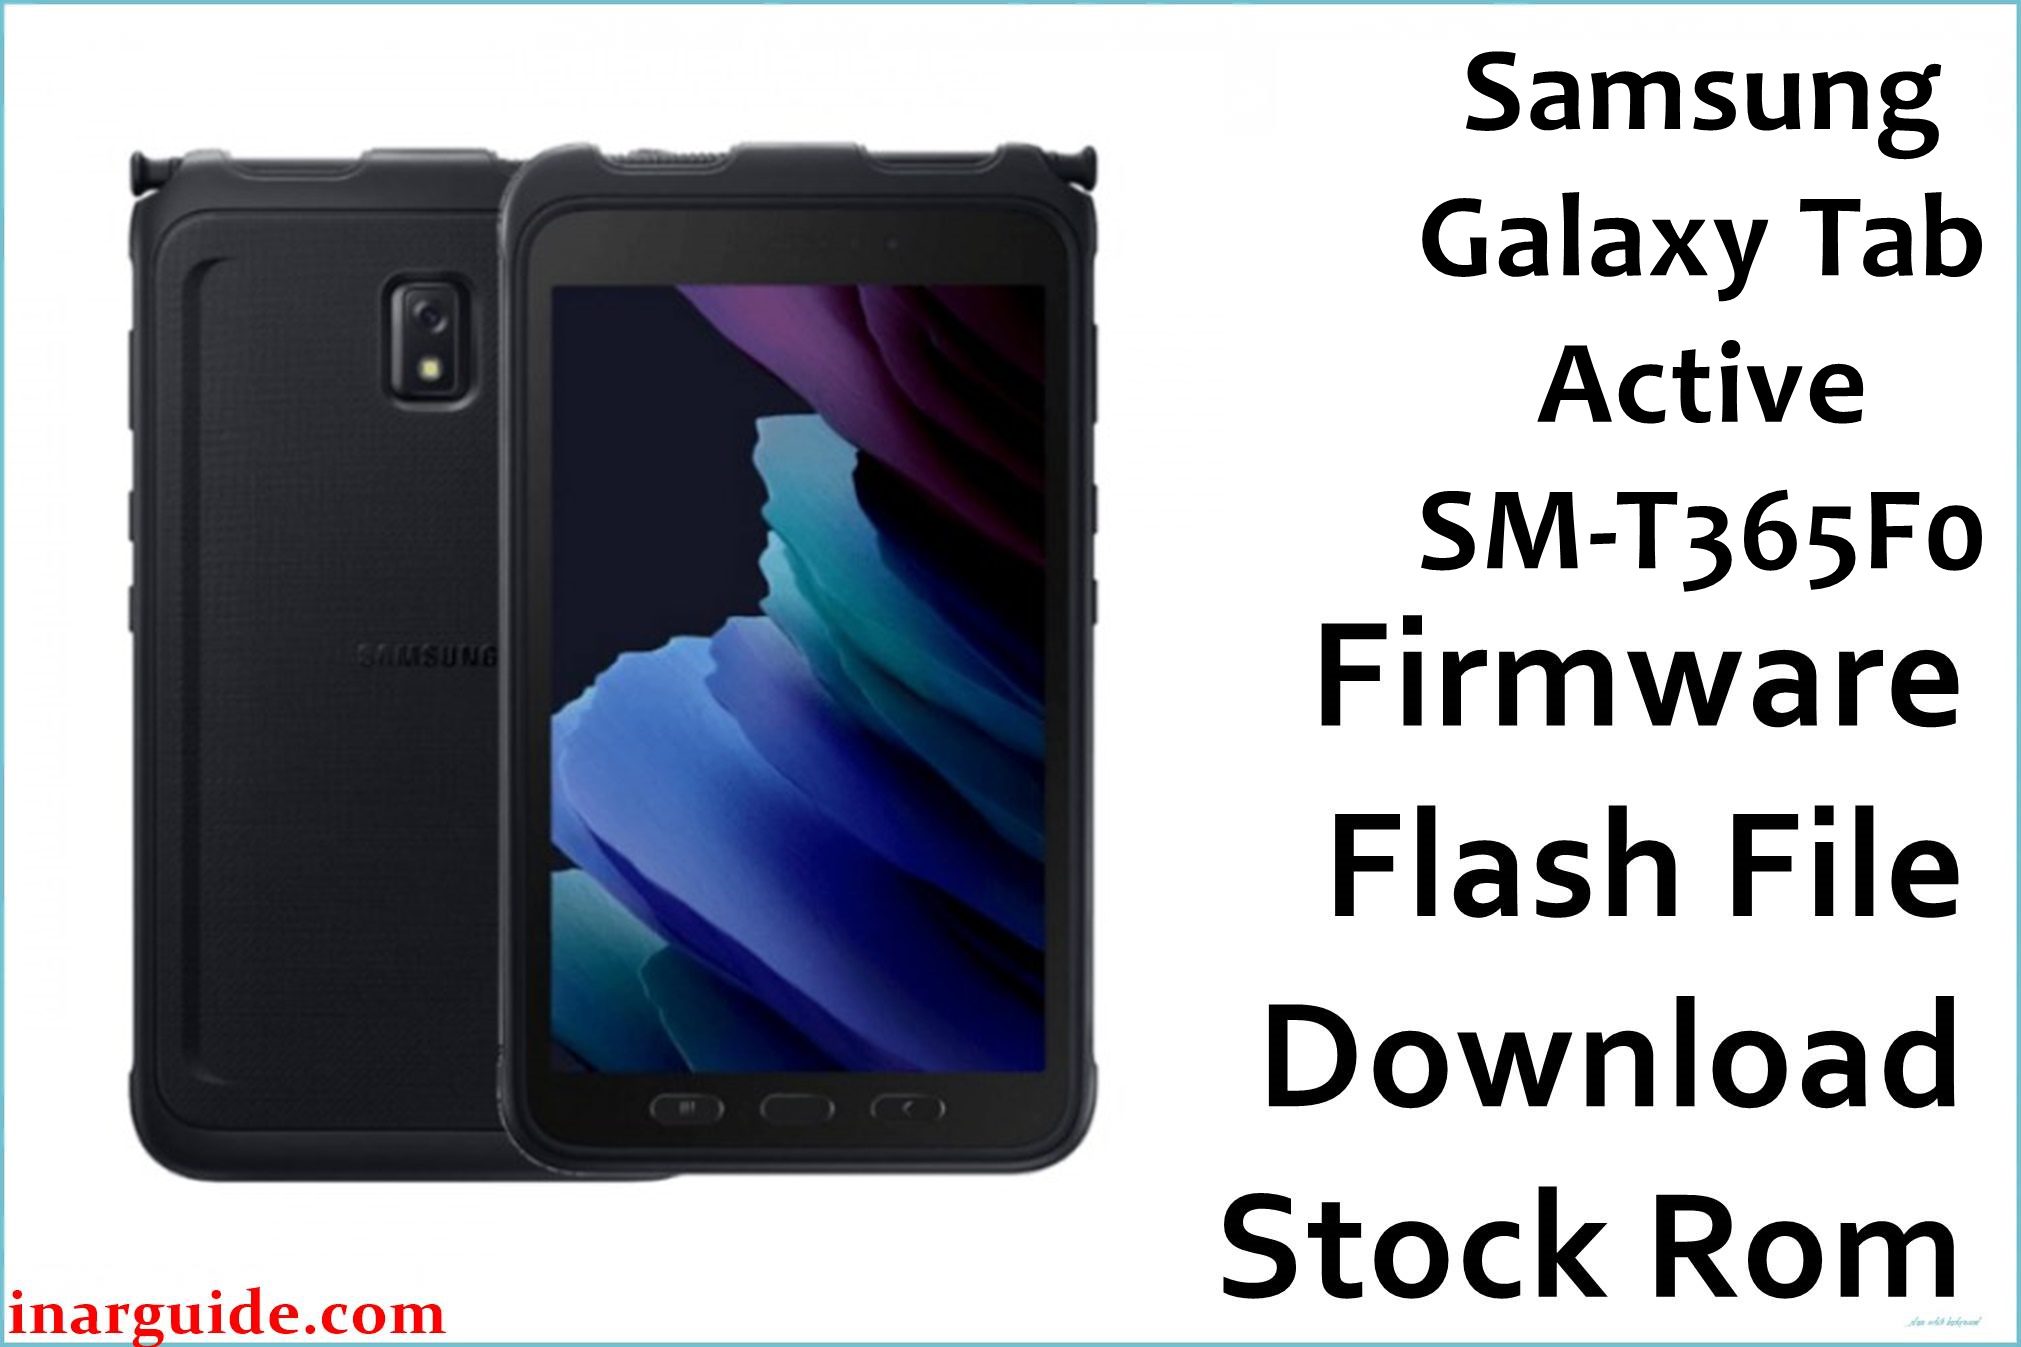 Samsung Galaxy Tab Active SM T365F0